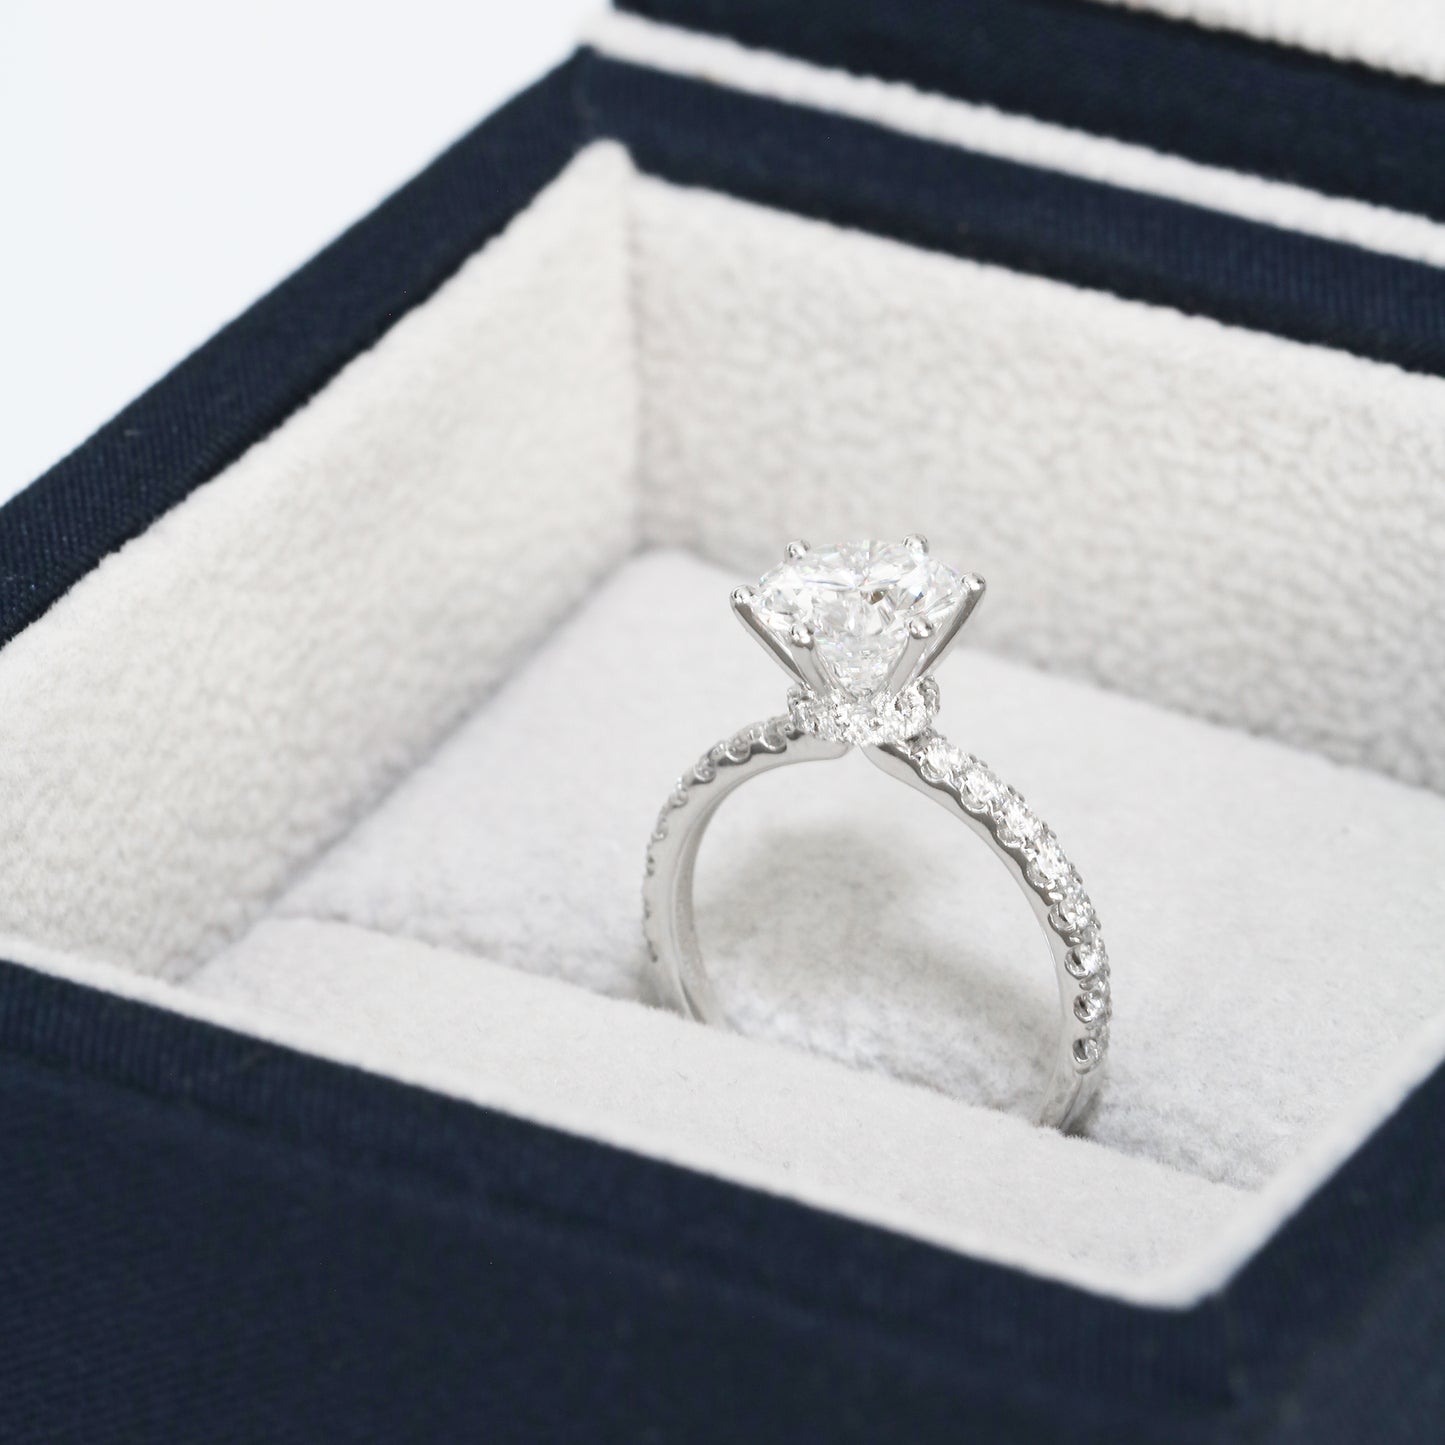 Eustoma Eternity 18k White Gold 6-Prong Hidden Halo Diamond Engagement Ring Setting 18k白金六爪永恆求婚鑽石戒指款式